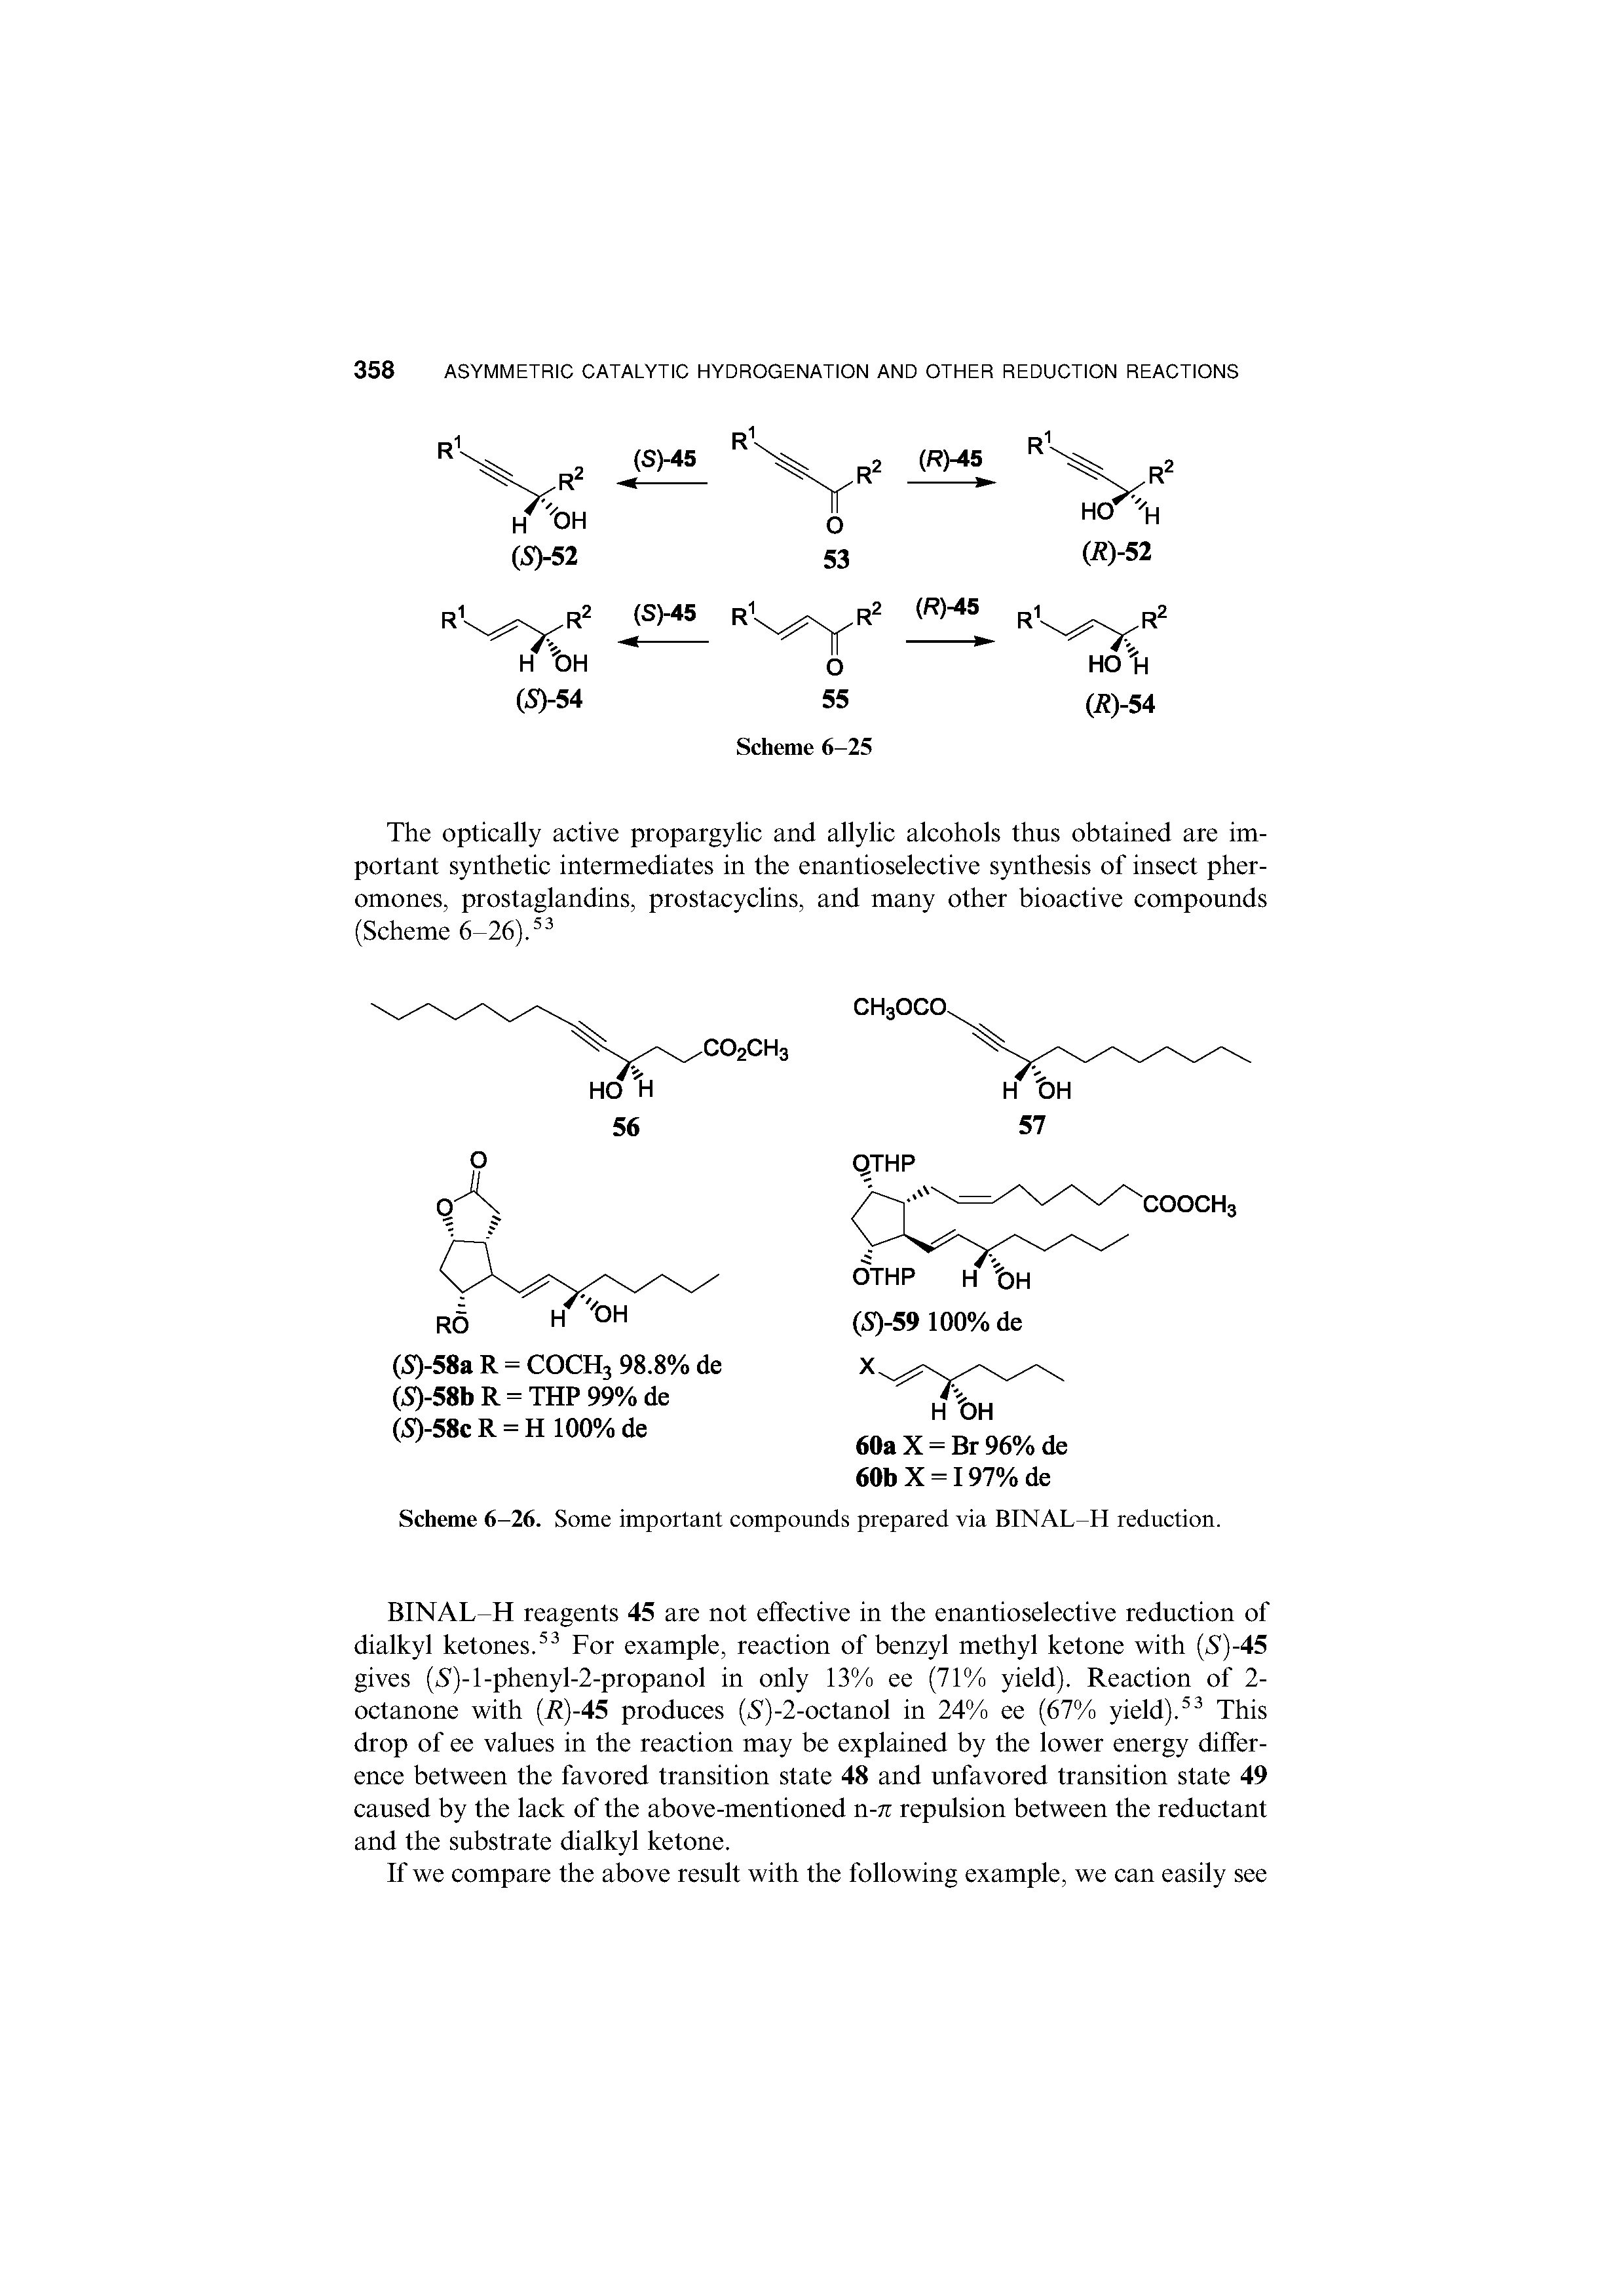 Scheme 6-26. Some important compounds prepared via BINAL-H reduction.